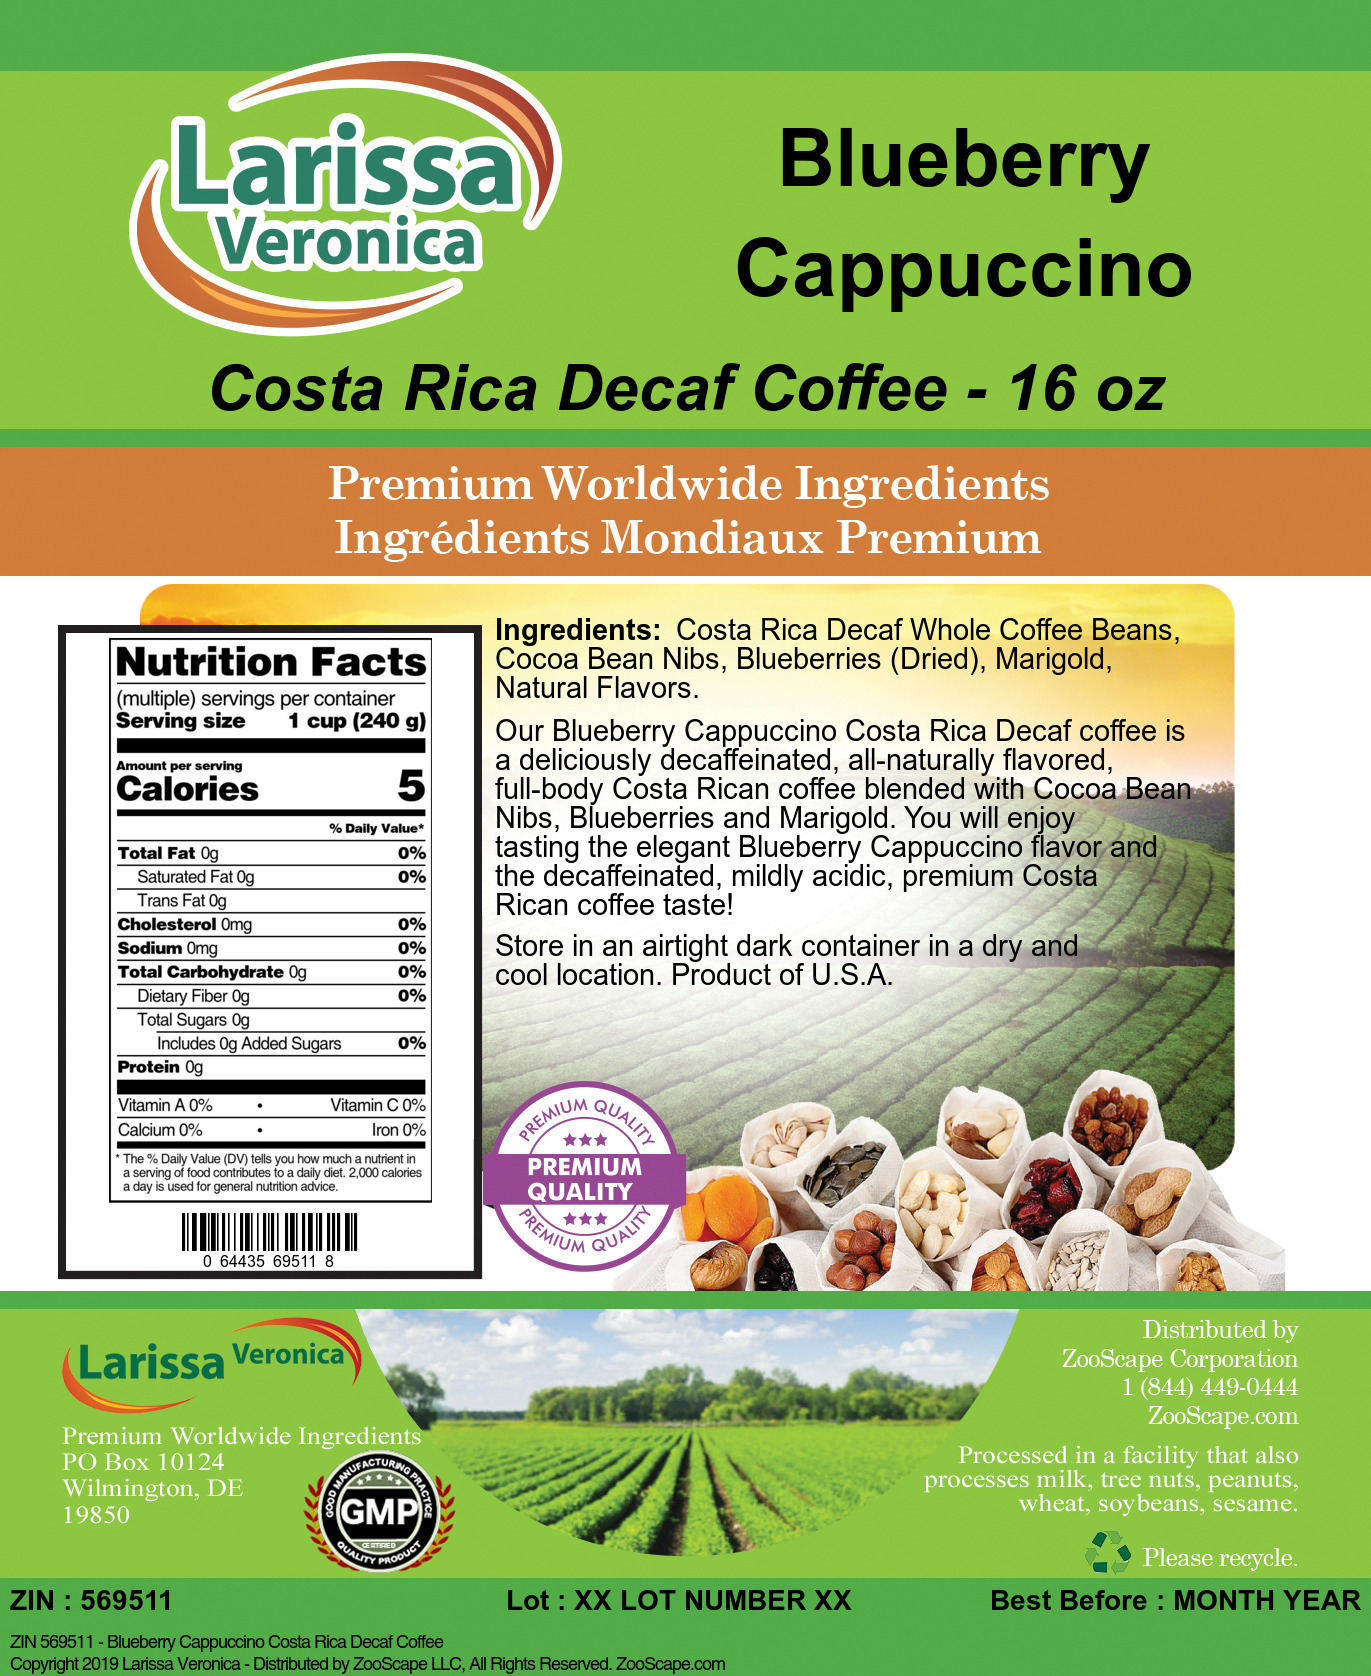 Blueberry Cappuccino Costa Rica Decaf Coffee - Label